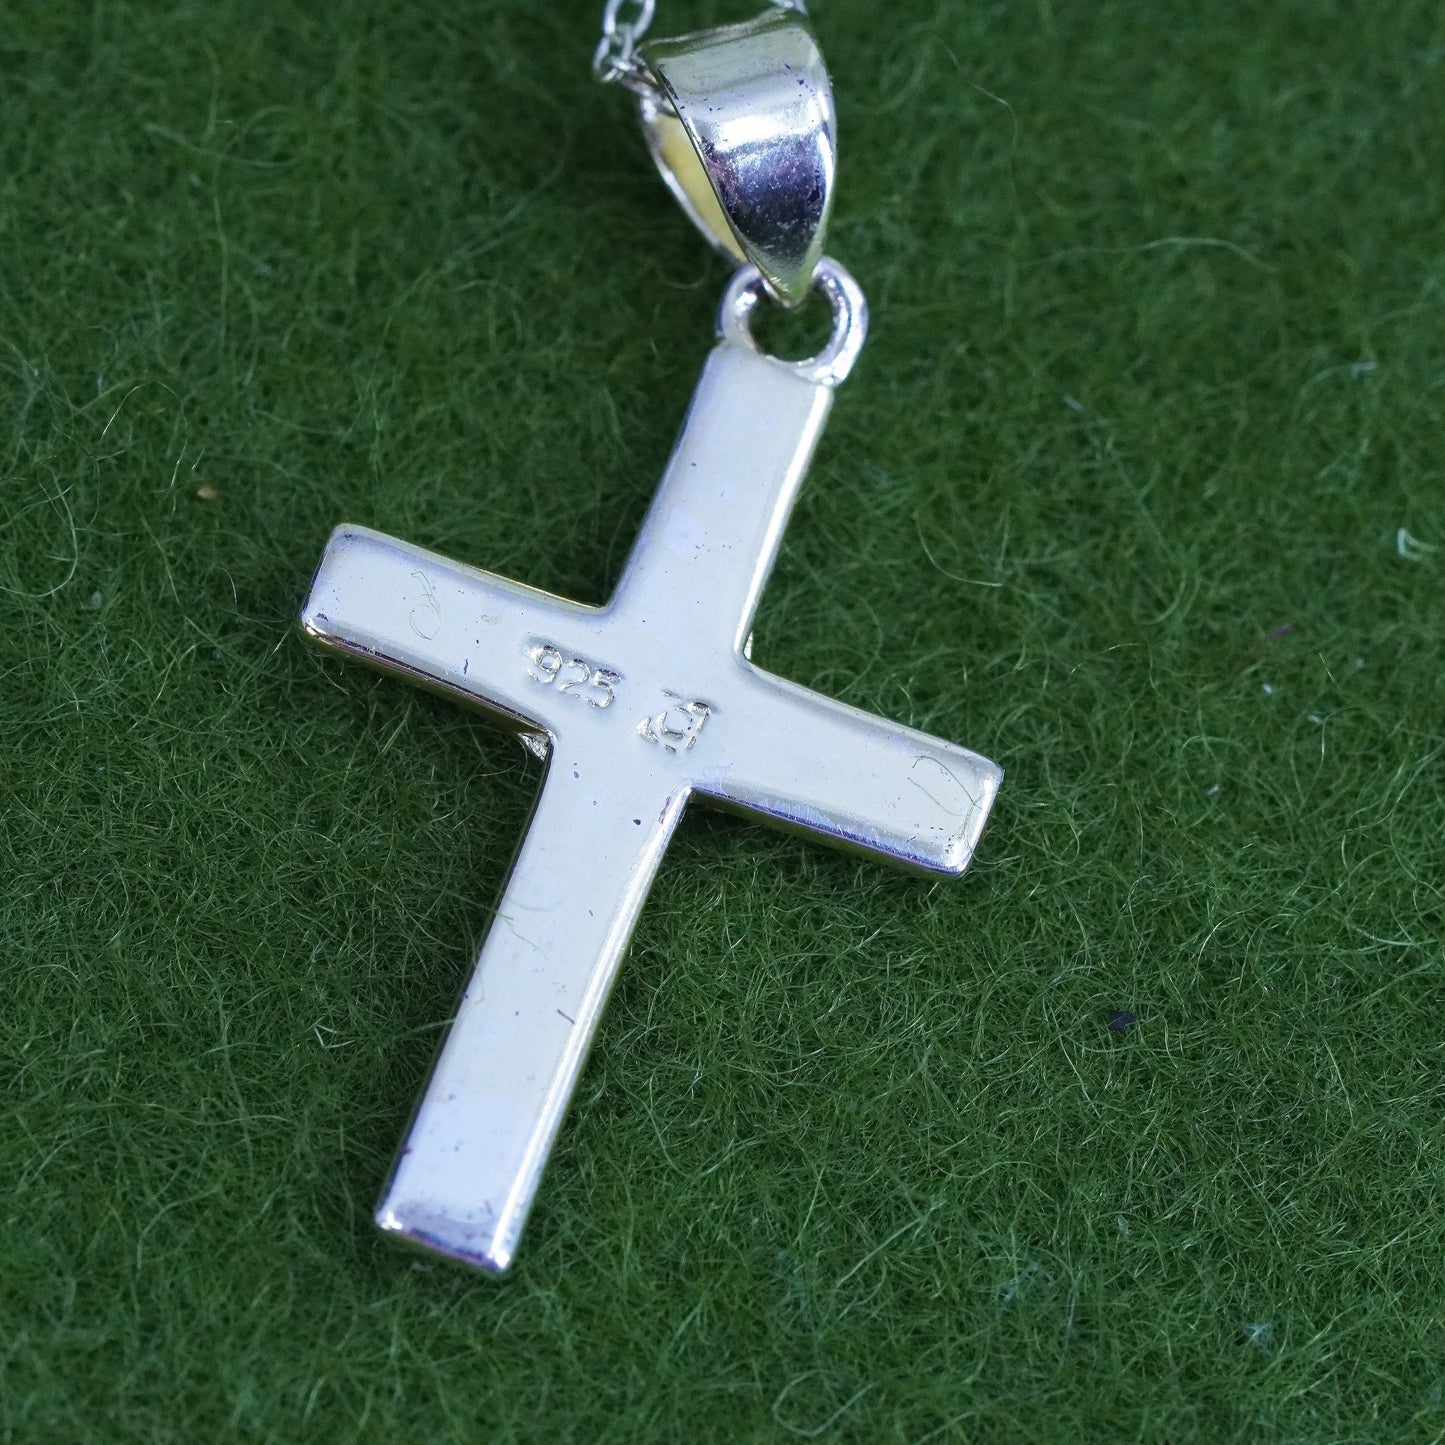 18”, VTG sterling silver flatten circle link necklace cross pendant footprint